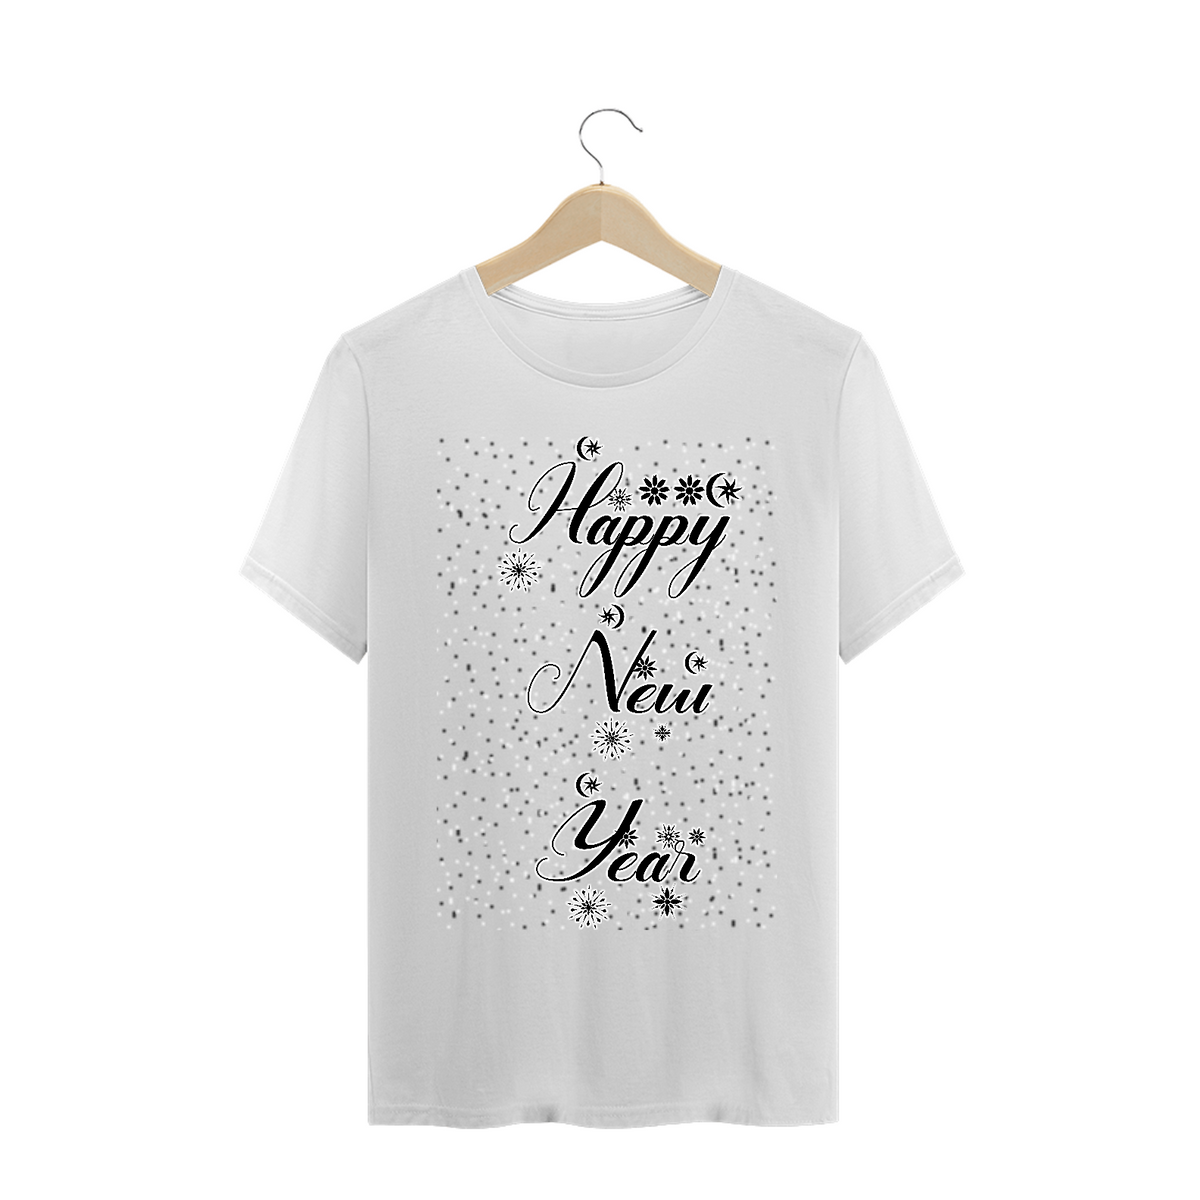 Nome do produto: Camiseta Frase Happy New Year